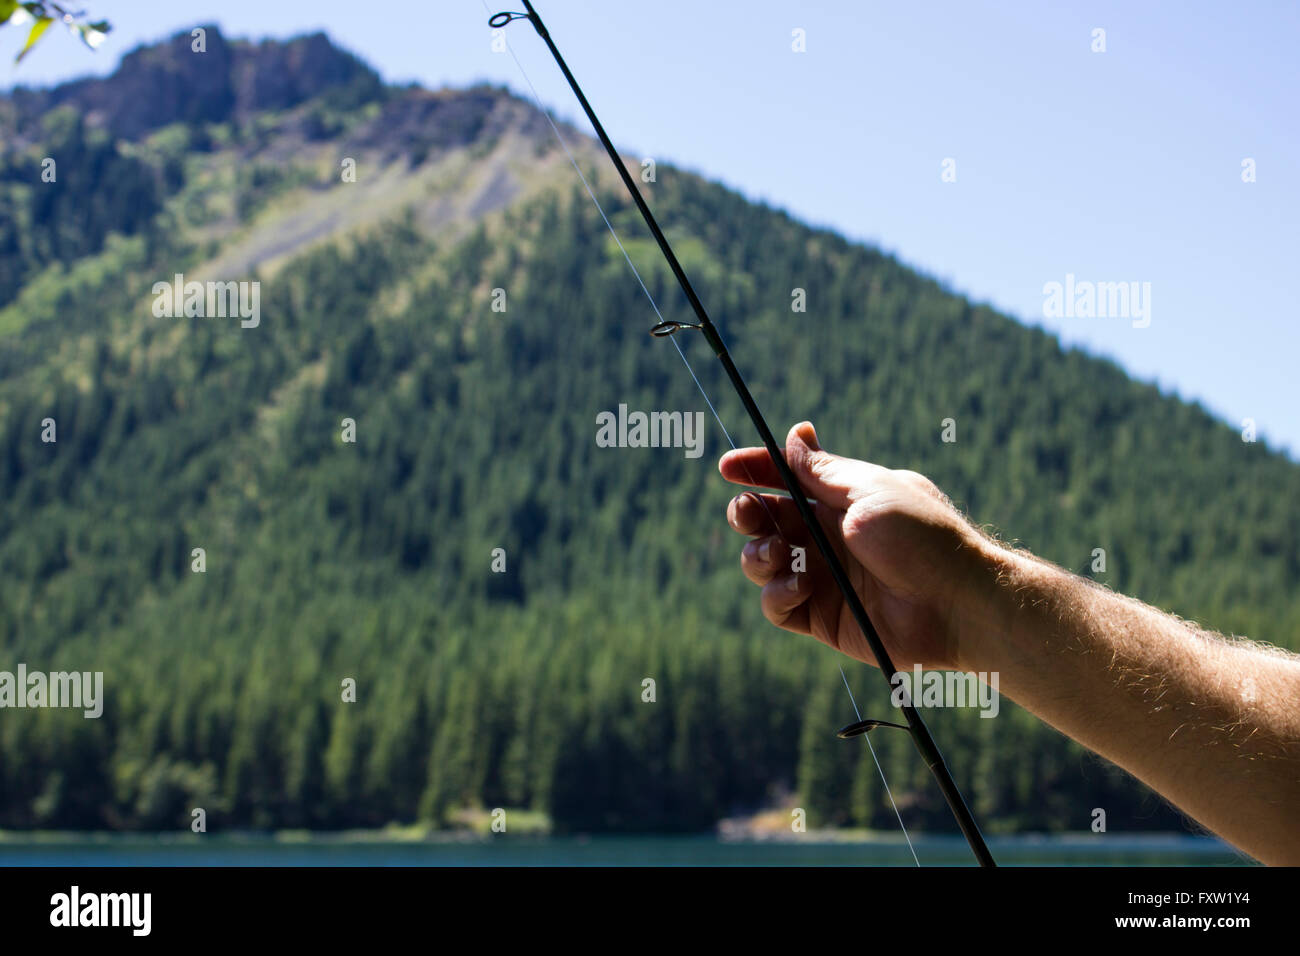 Fishing pole fishingpole hi-res stock photography and images - Alamy